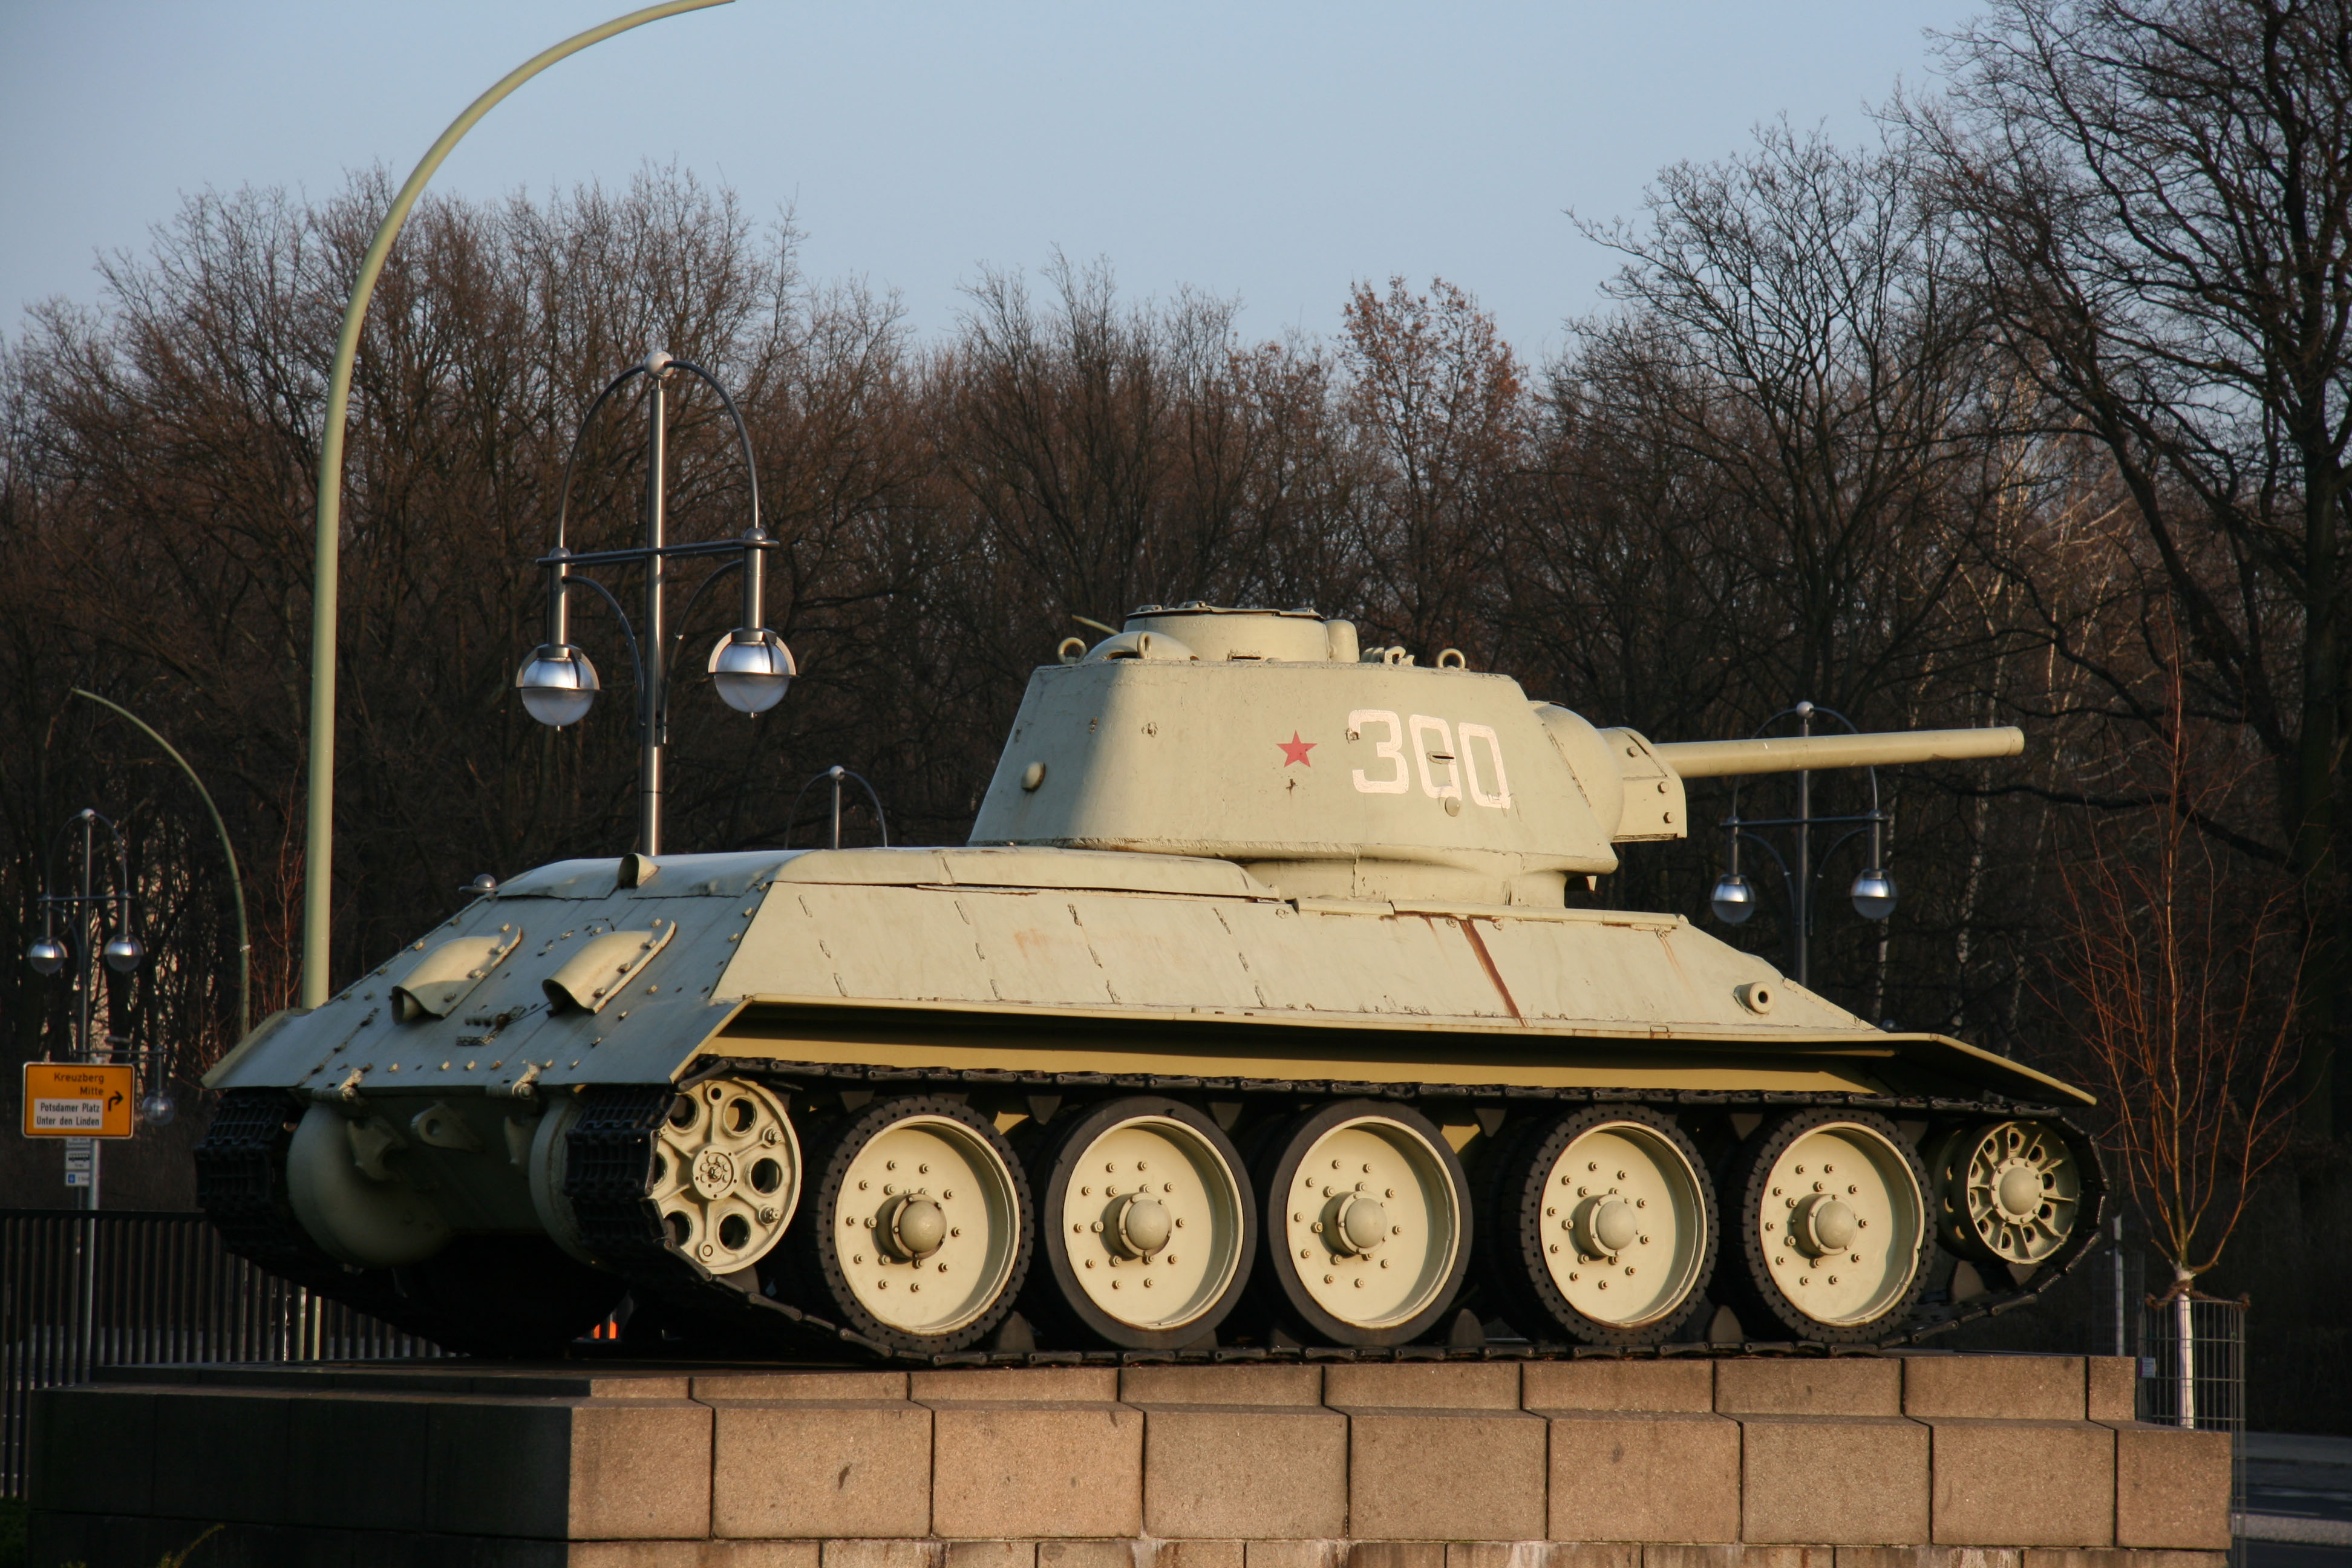 http://andberlin.com/wp-content/uploads/2012/06/tank-at-the-soviet-war-memorial.jpg